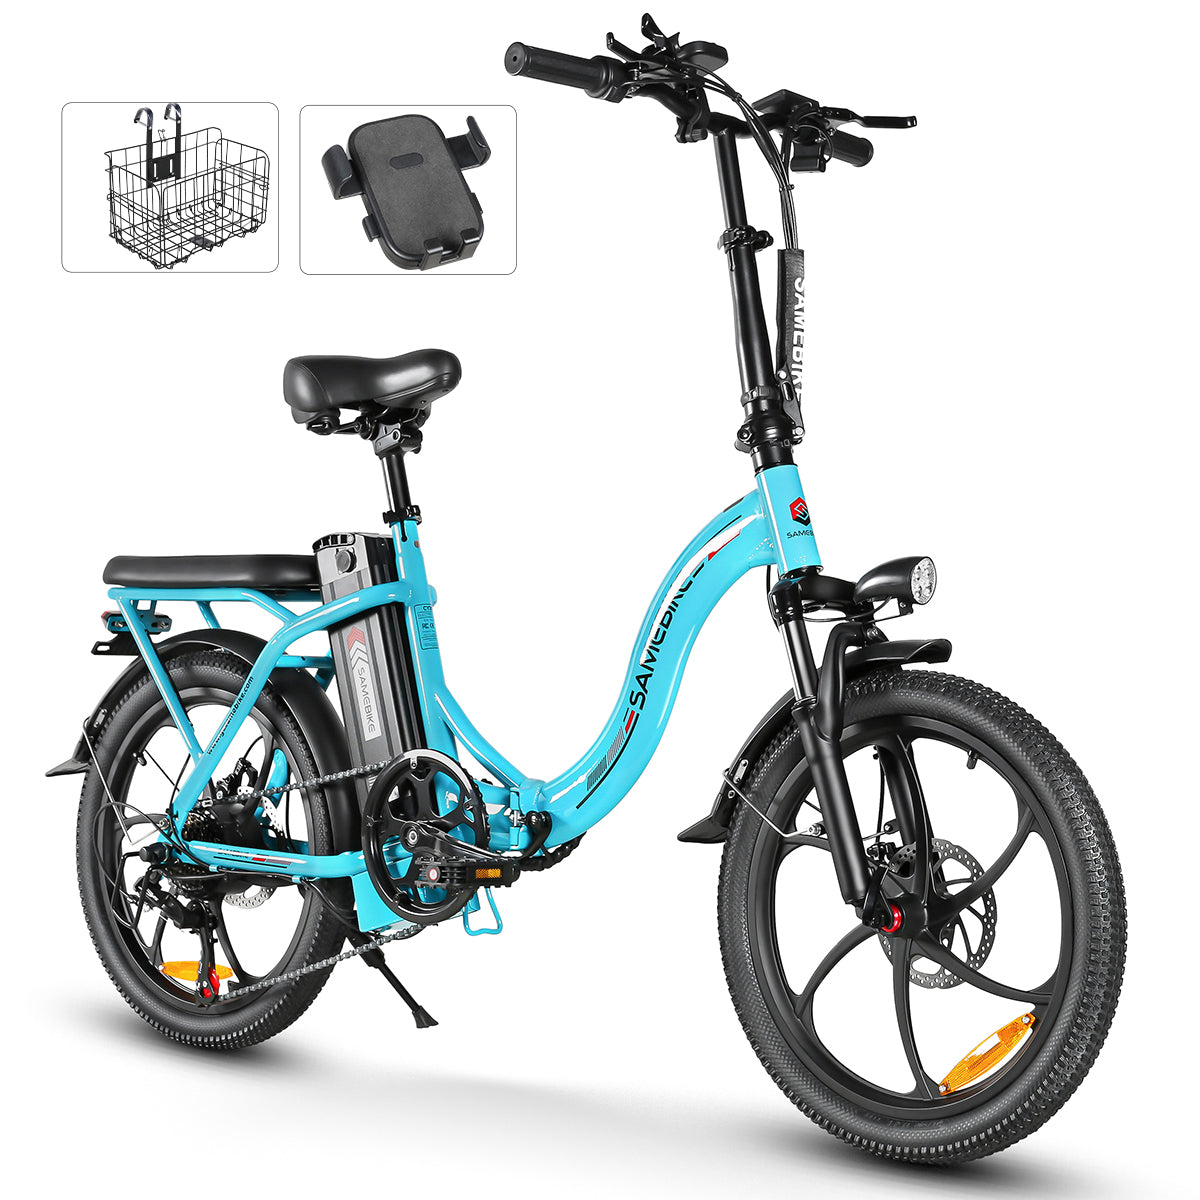 CY20 Portable Commuter Electric Bike